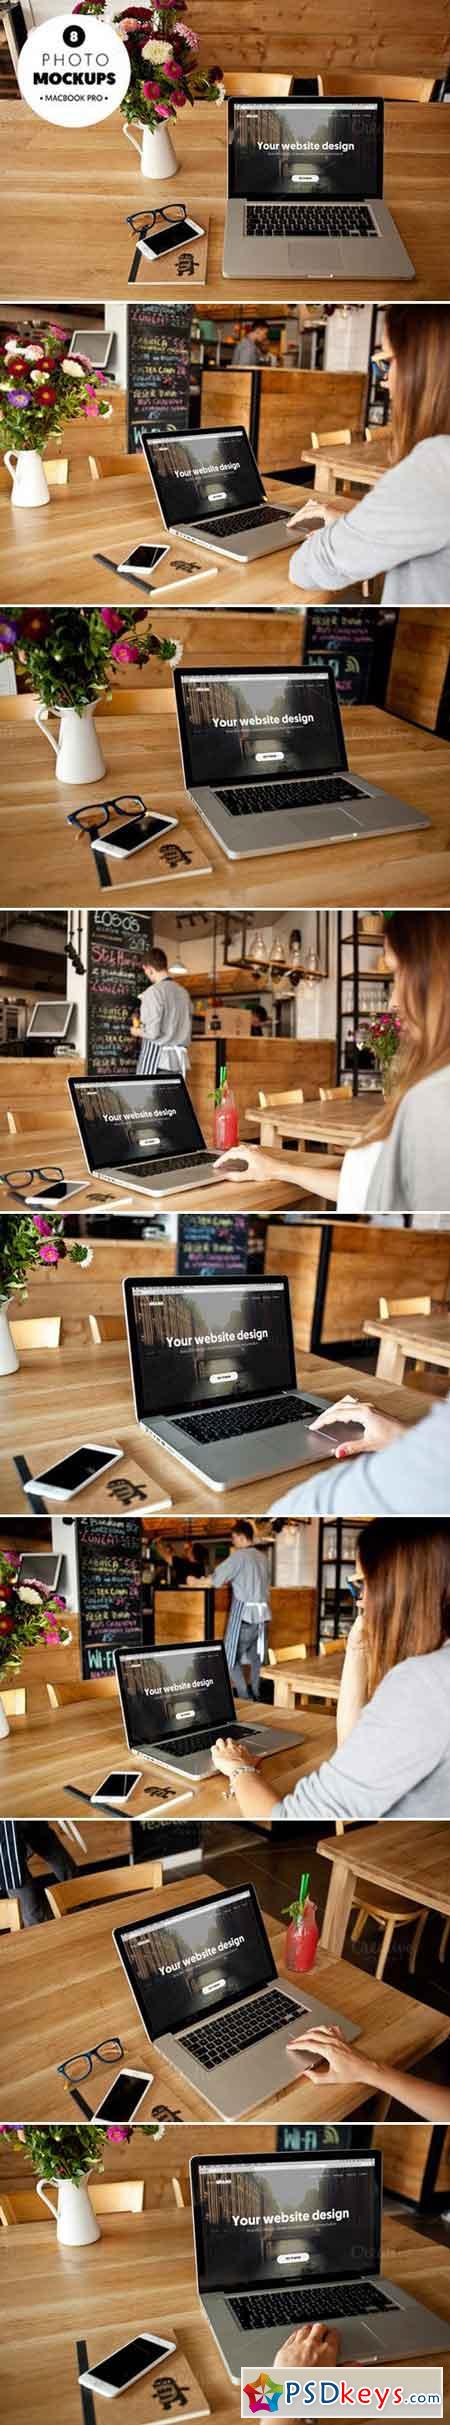 MacBook Pro - 8 mockups in a cafe 411542